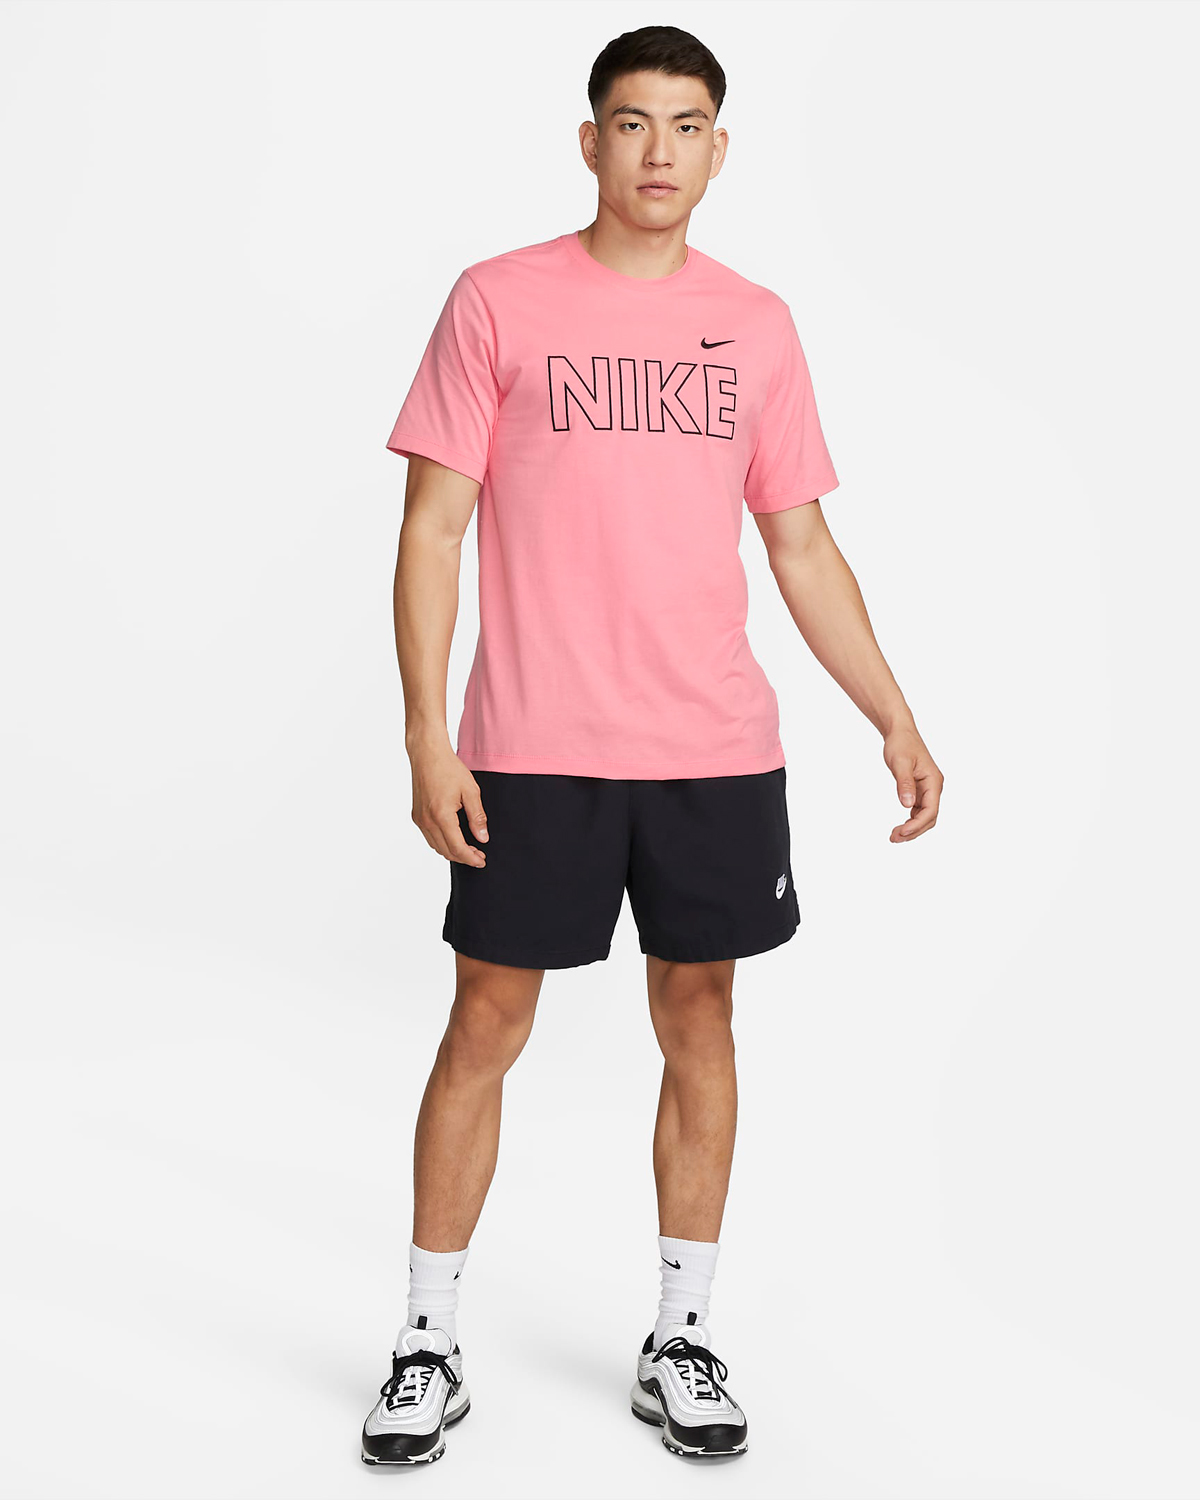 Nike-Sportswear-T-Shirt-Coral-Chalk-Outfit